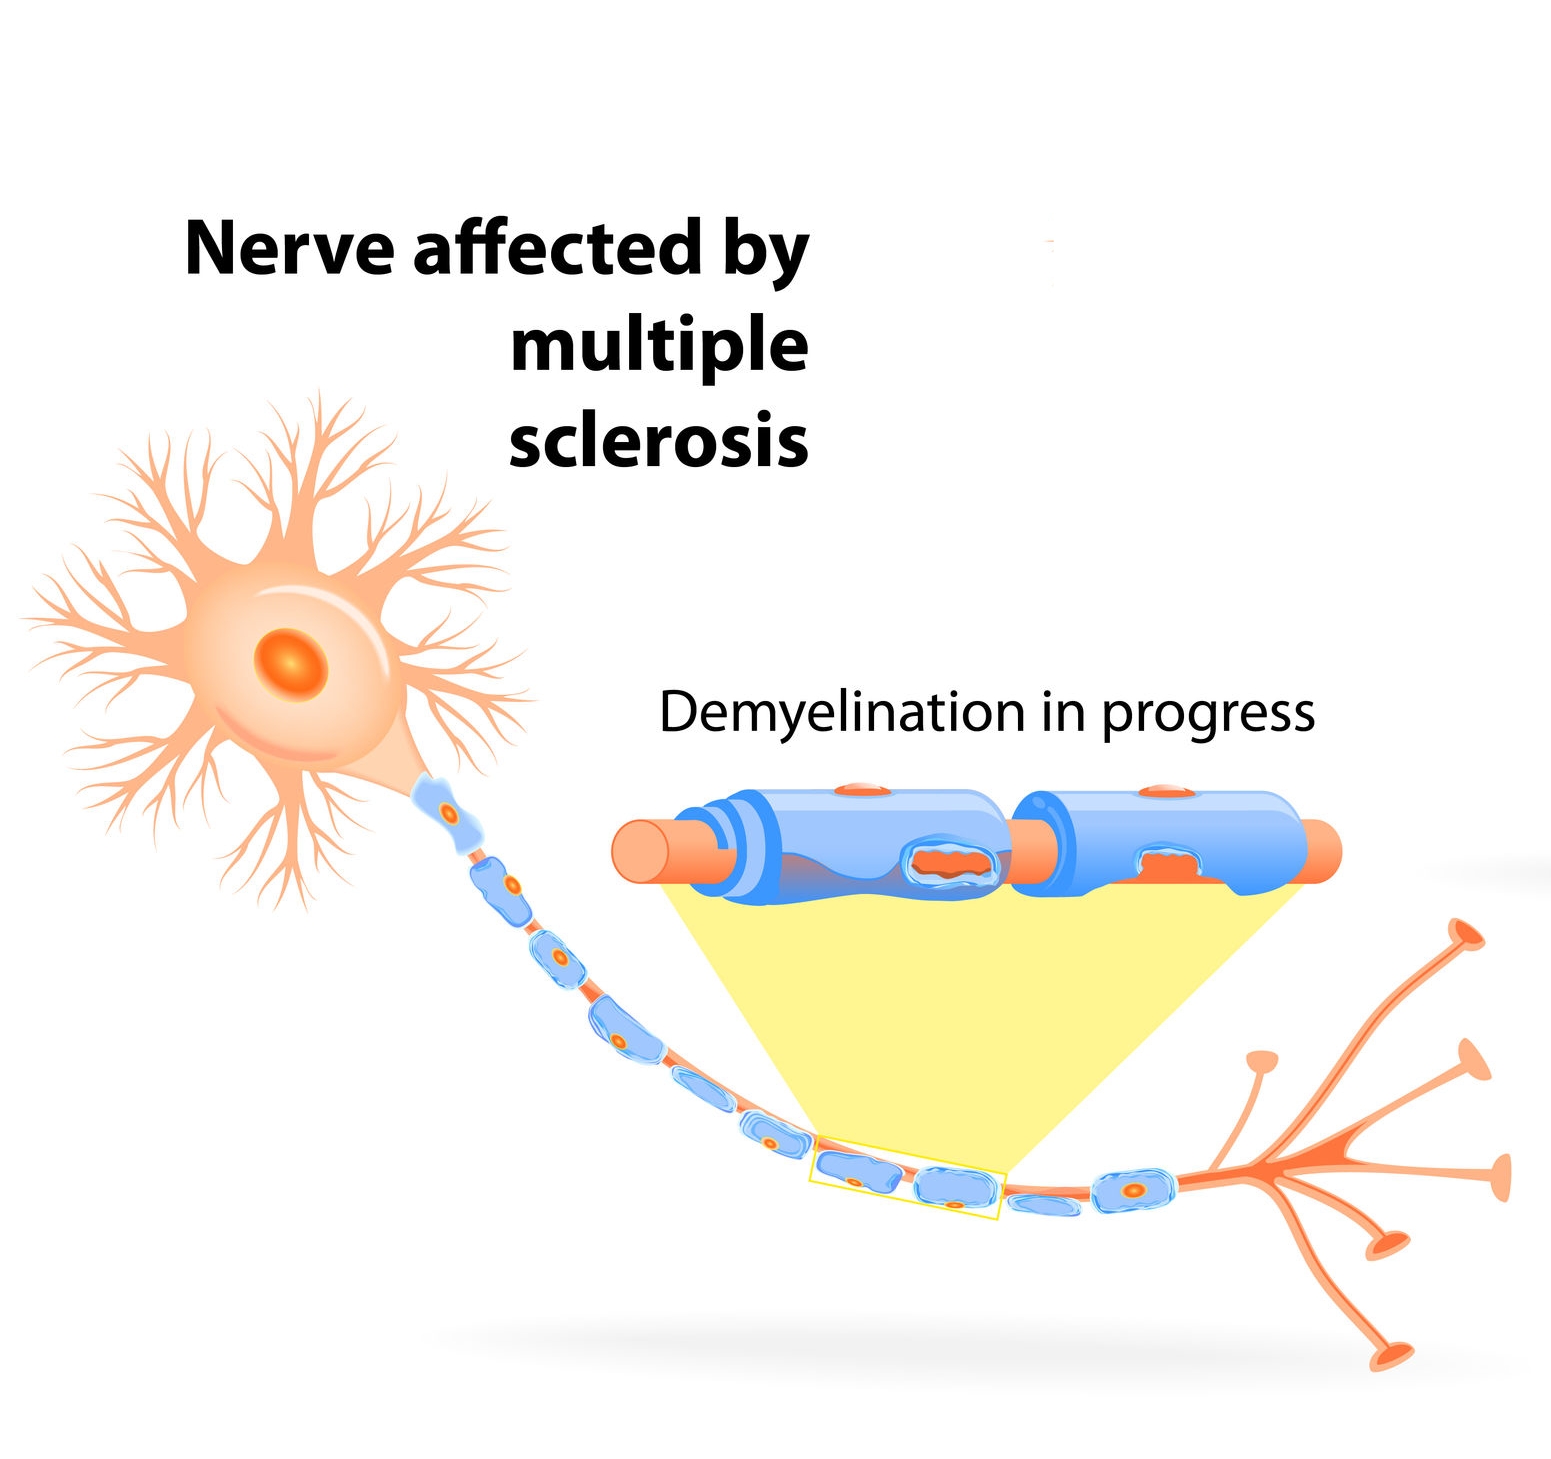 Nerve damaged by multiple sclerosis